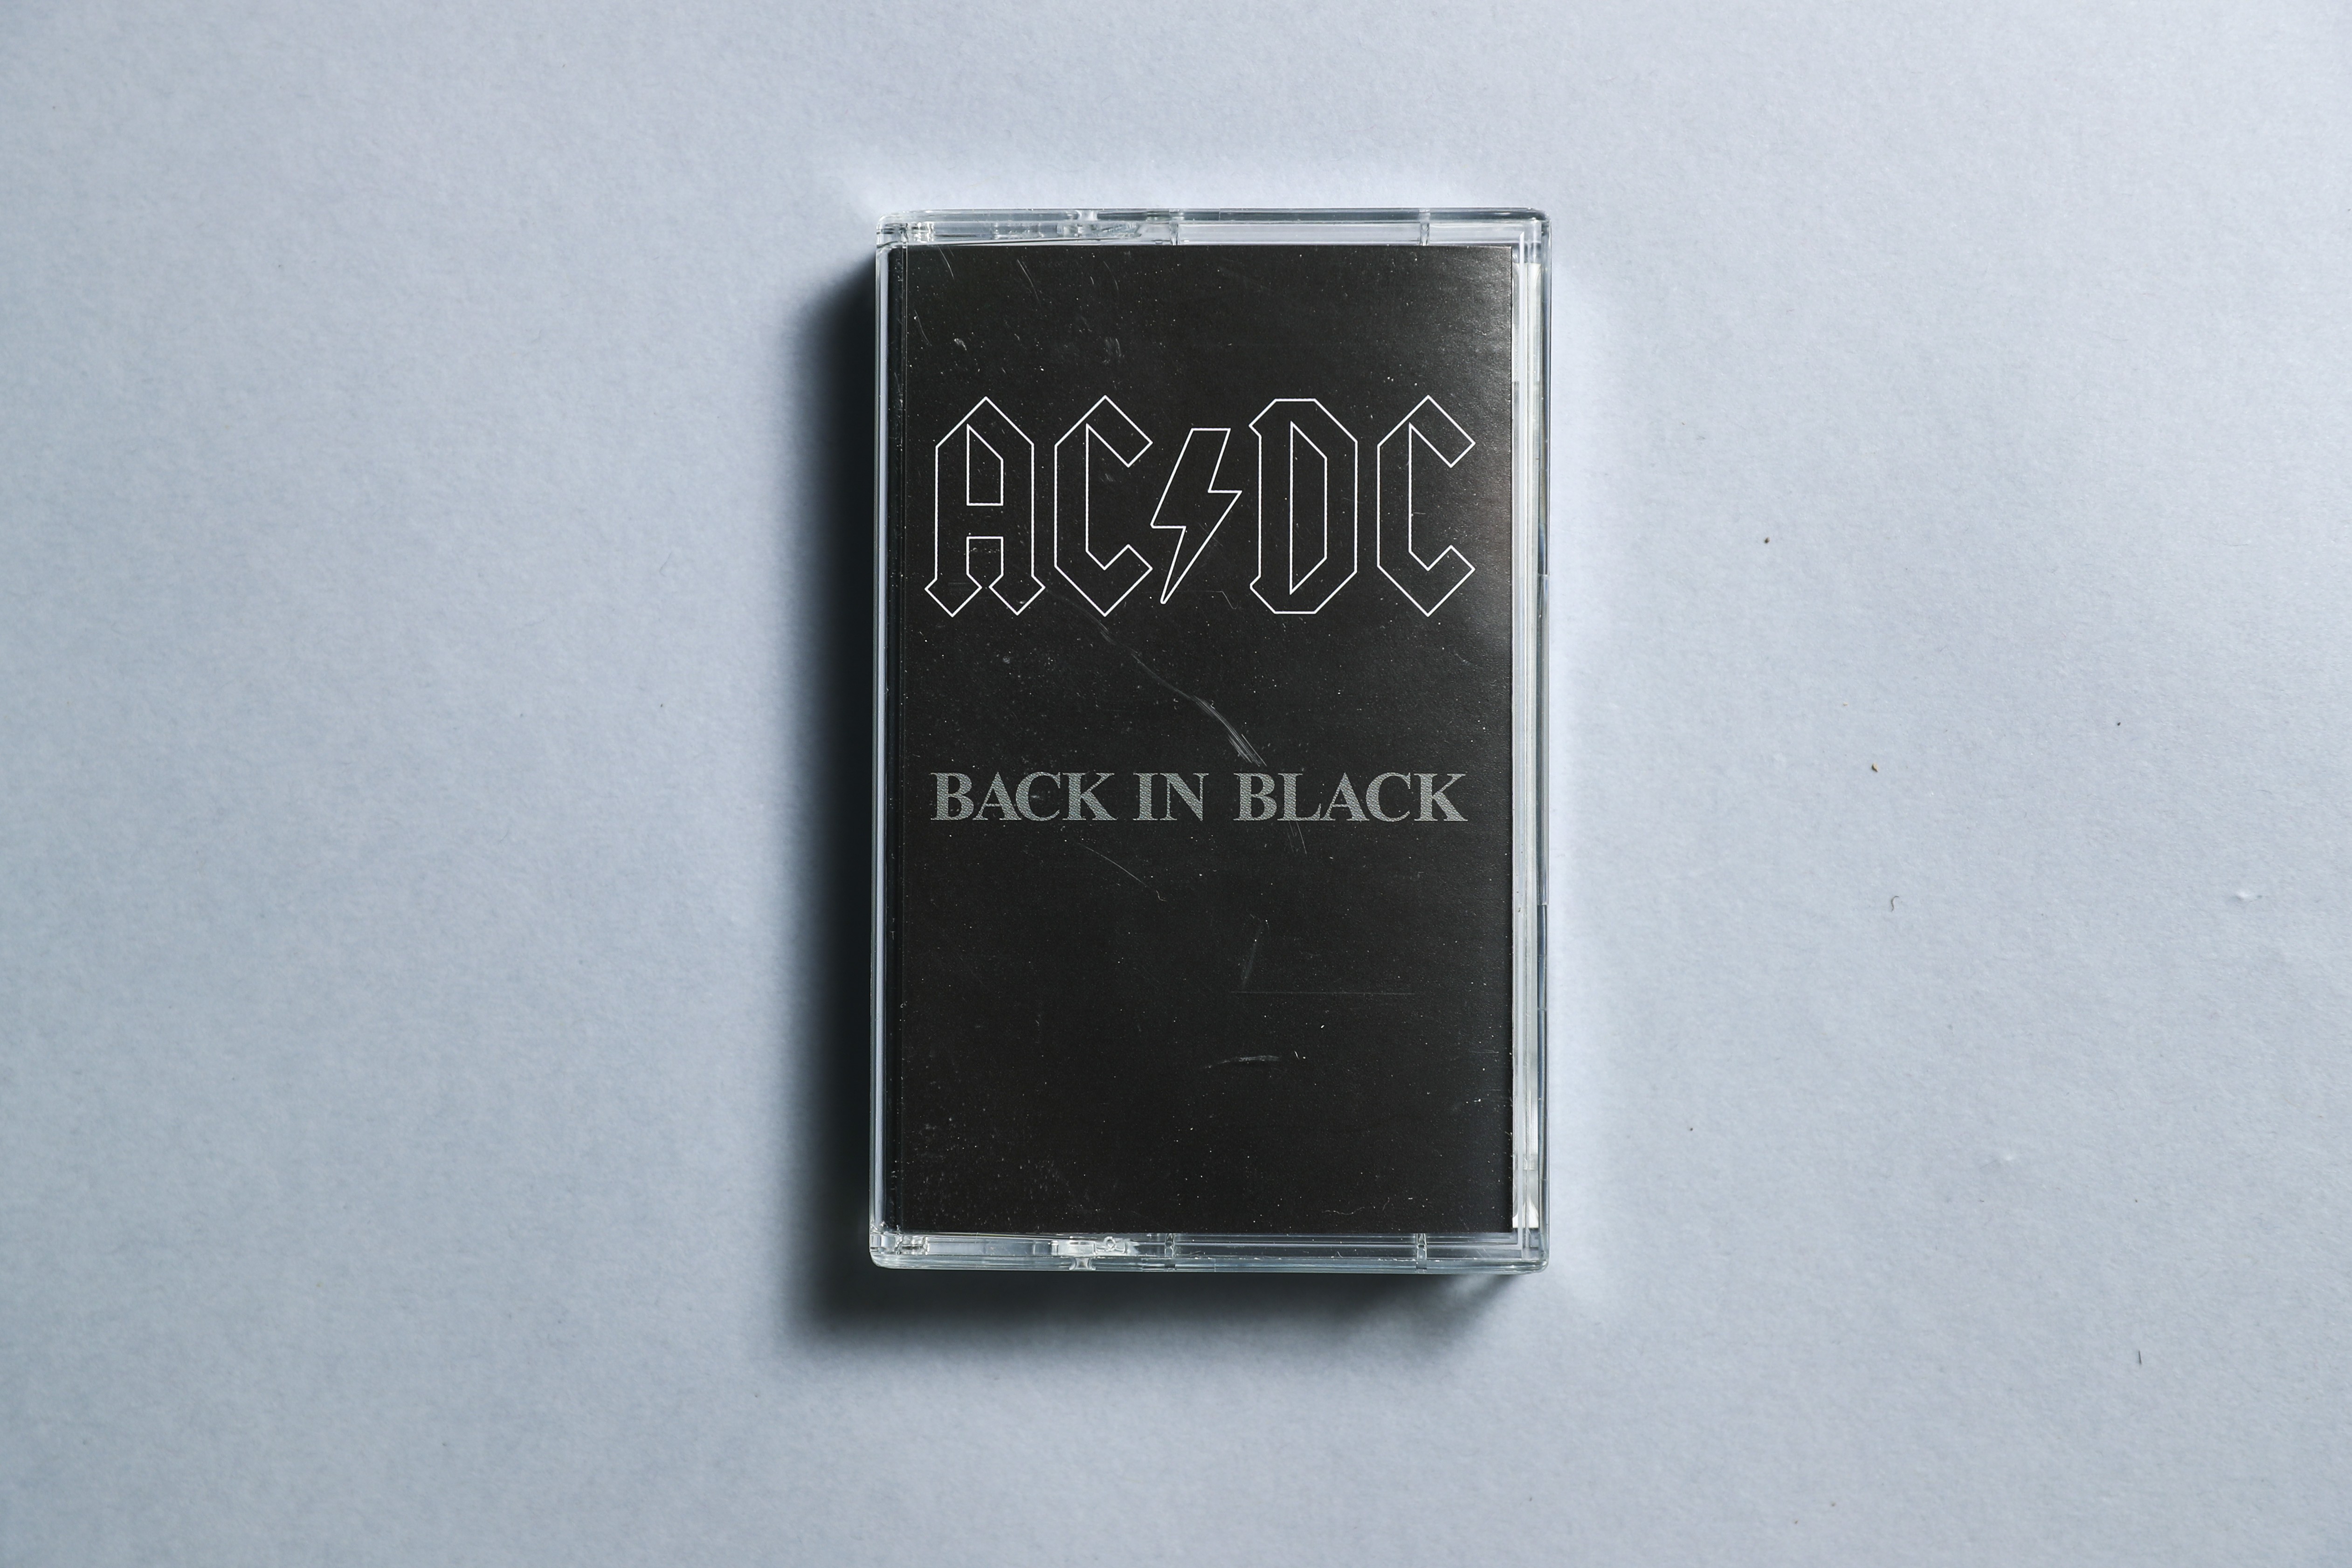 Em 2020 completa 40 anos do álbum Back in Black, da banda AC/DC (Foto: Getty Images)